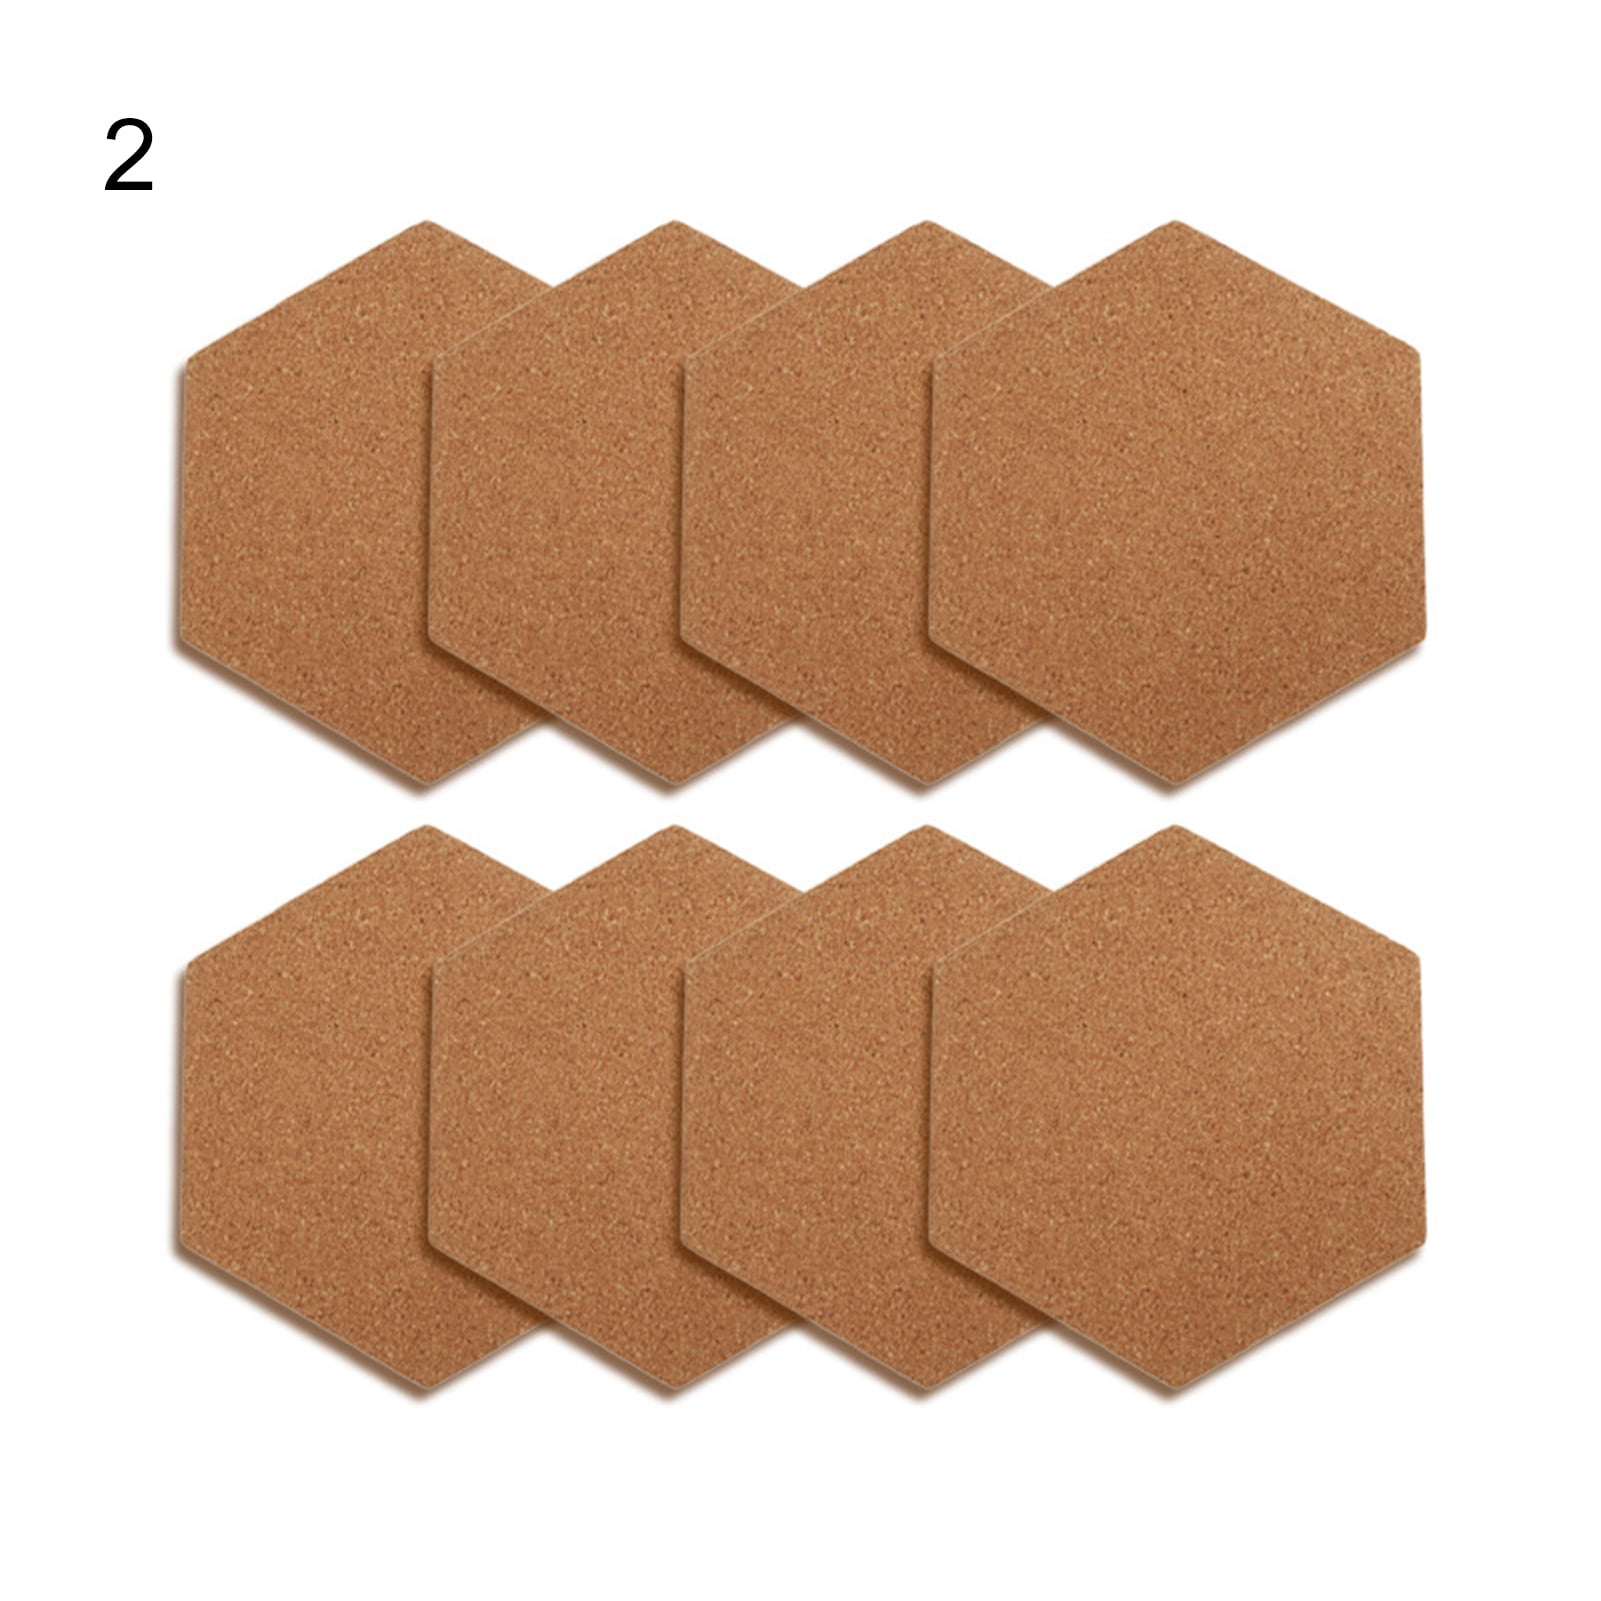 1pc Hexagon Cork Message Board Self Adhesive Tiles Bulletin For Home Wall Decor 